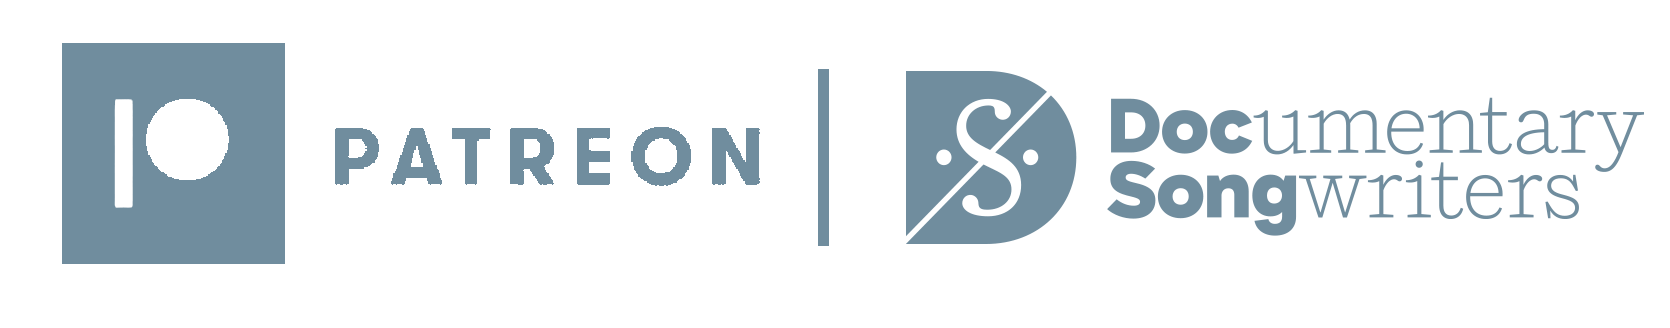 patreon-logo-startup_DS